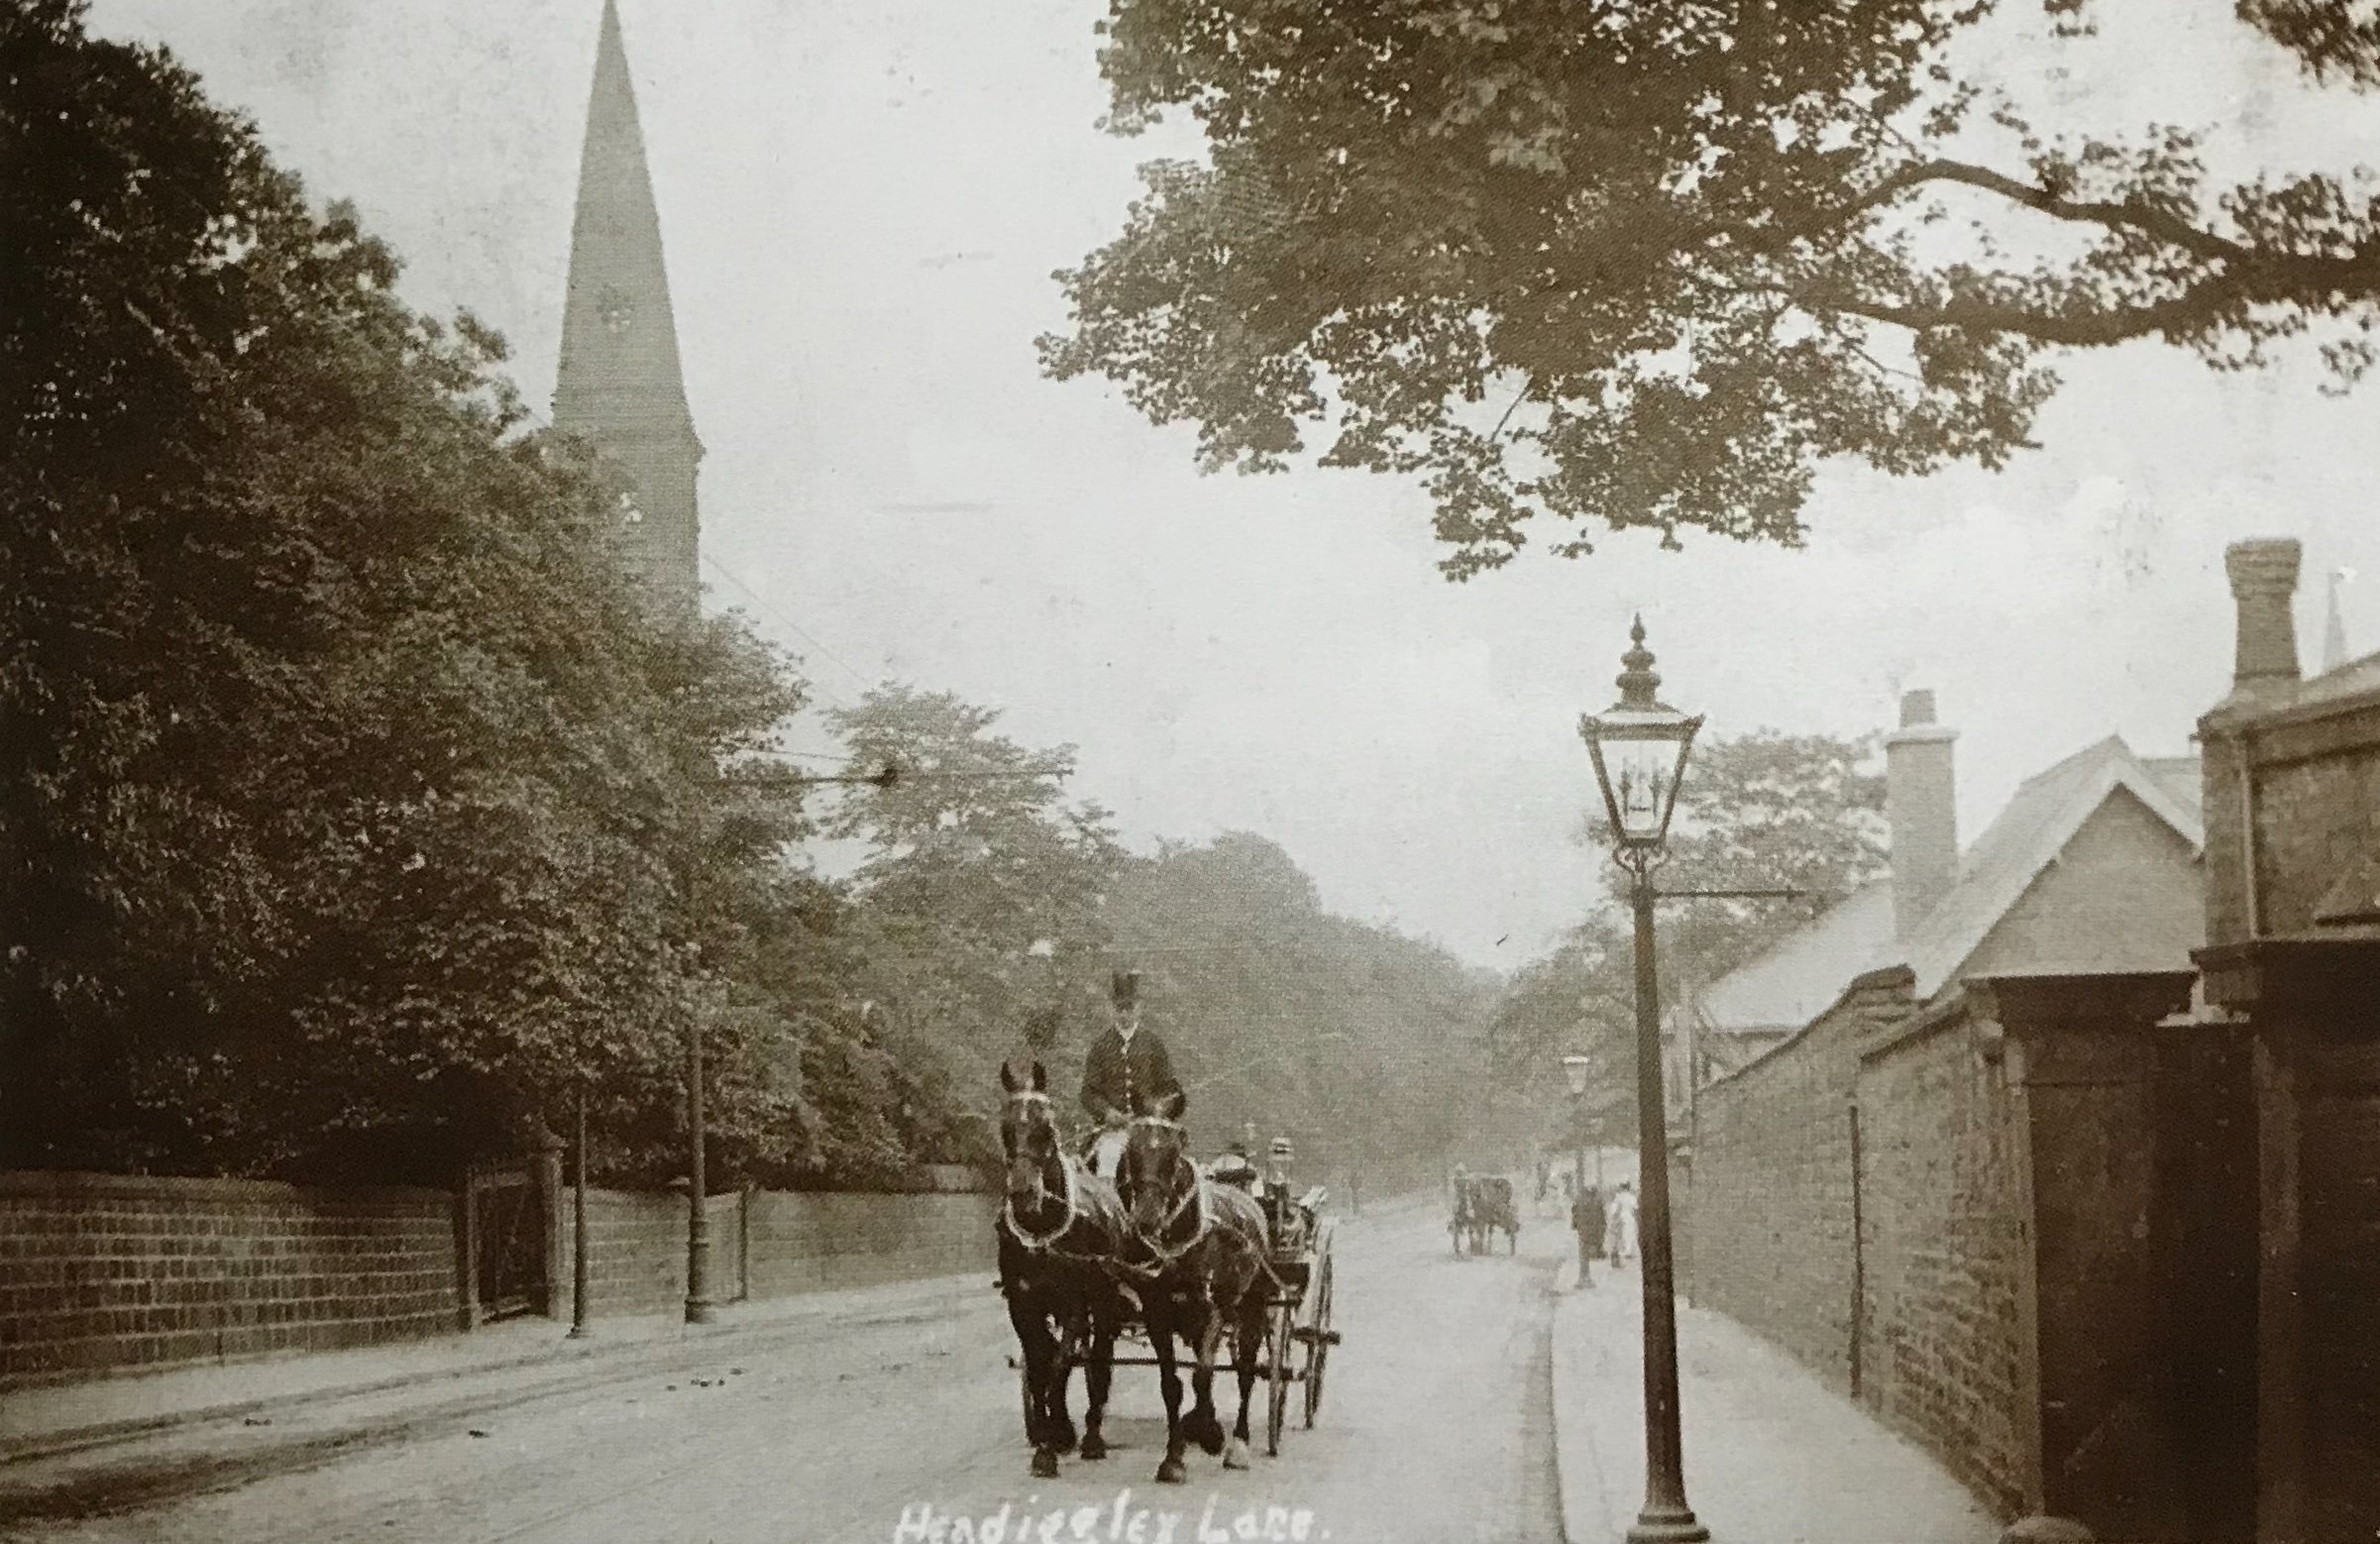 Headingley Lane, 1905